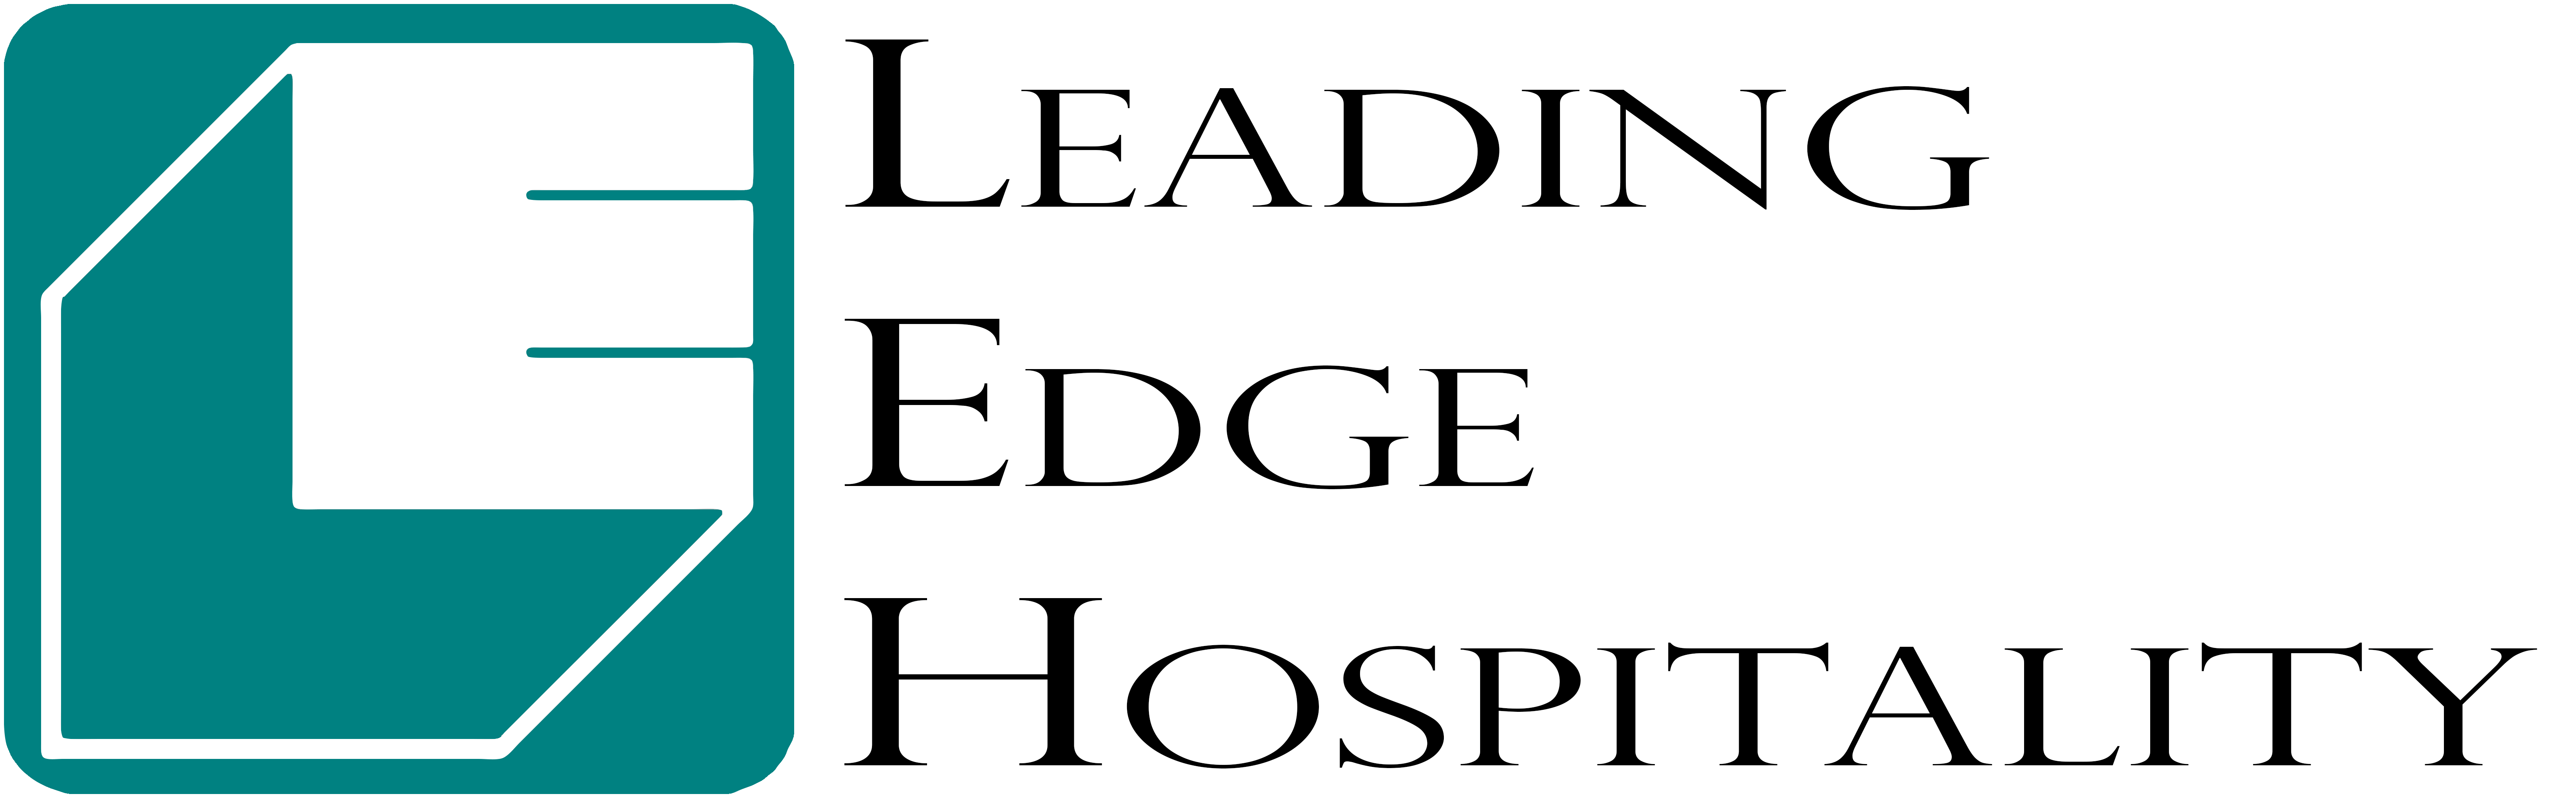 Leading Edge Hospitality | Restaurant Equipment & Supplies